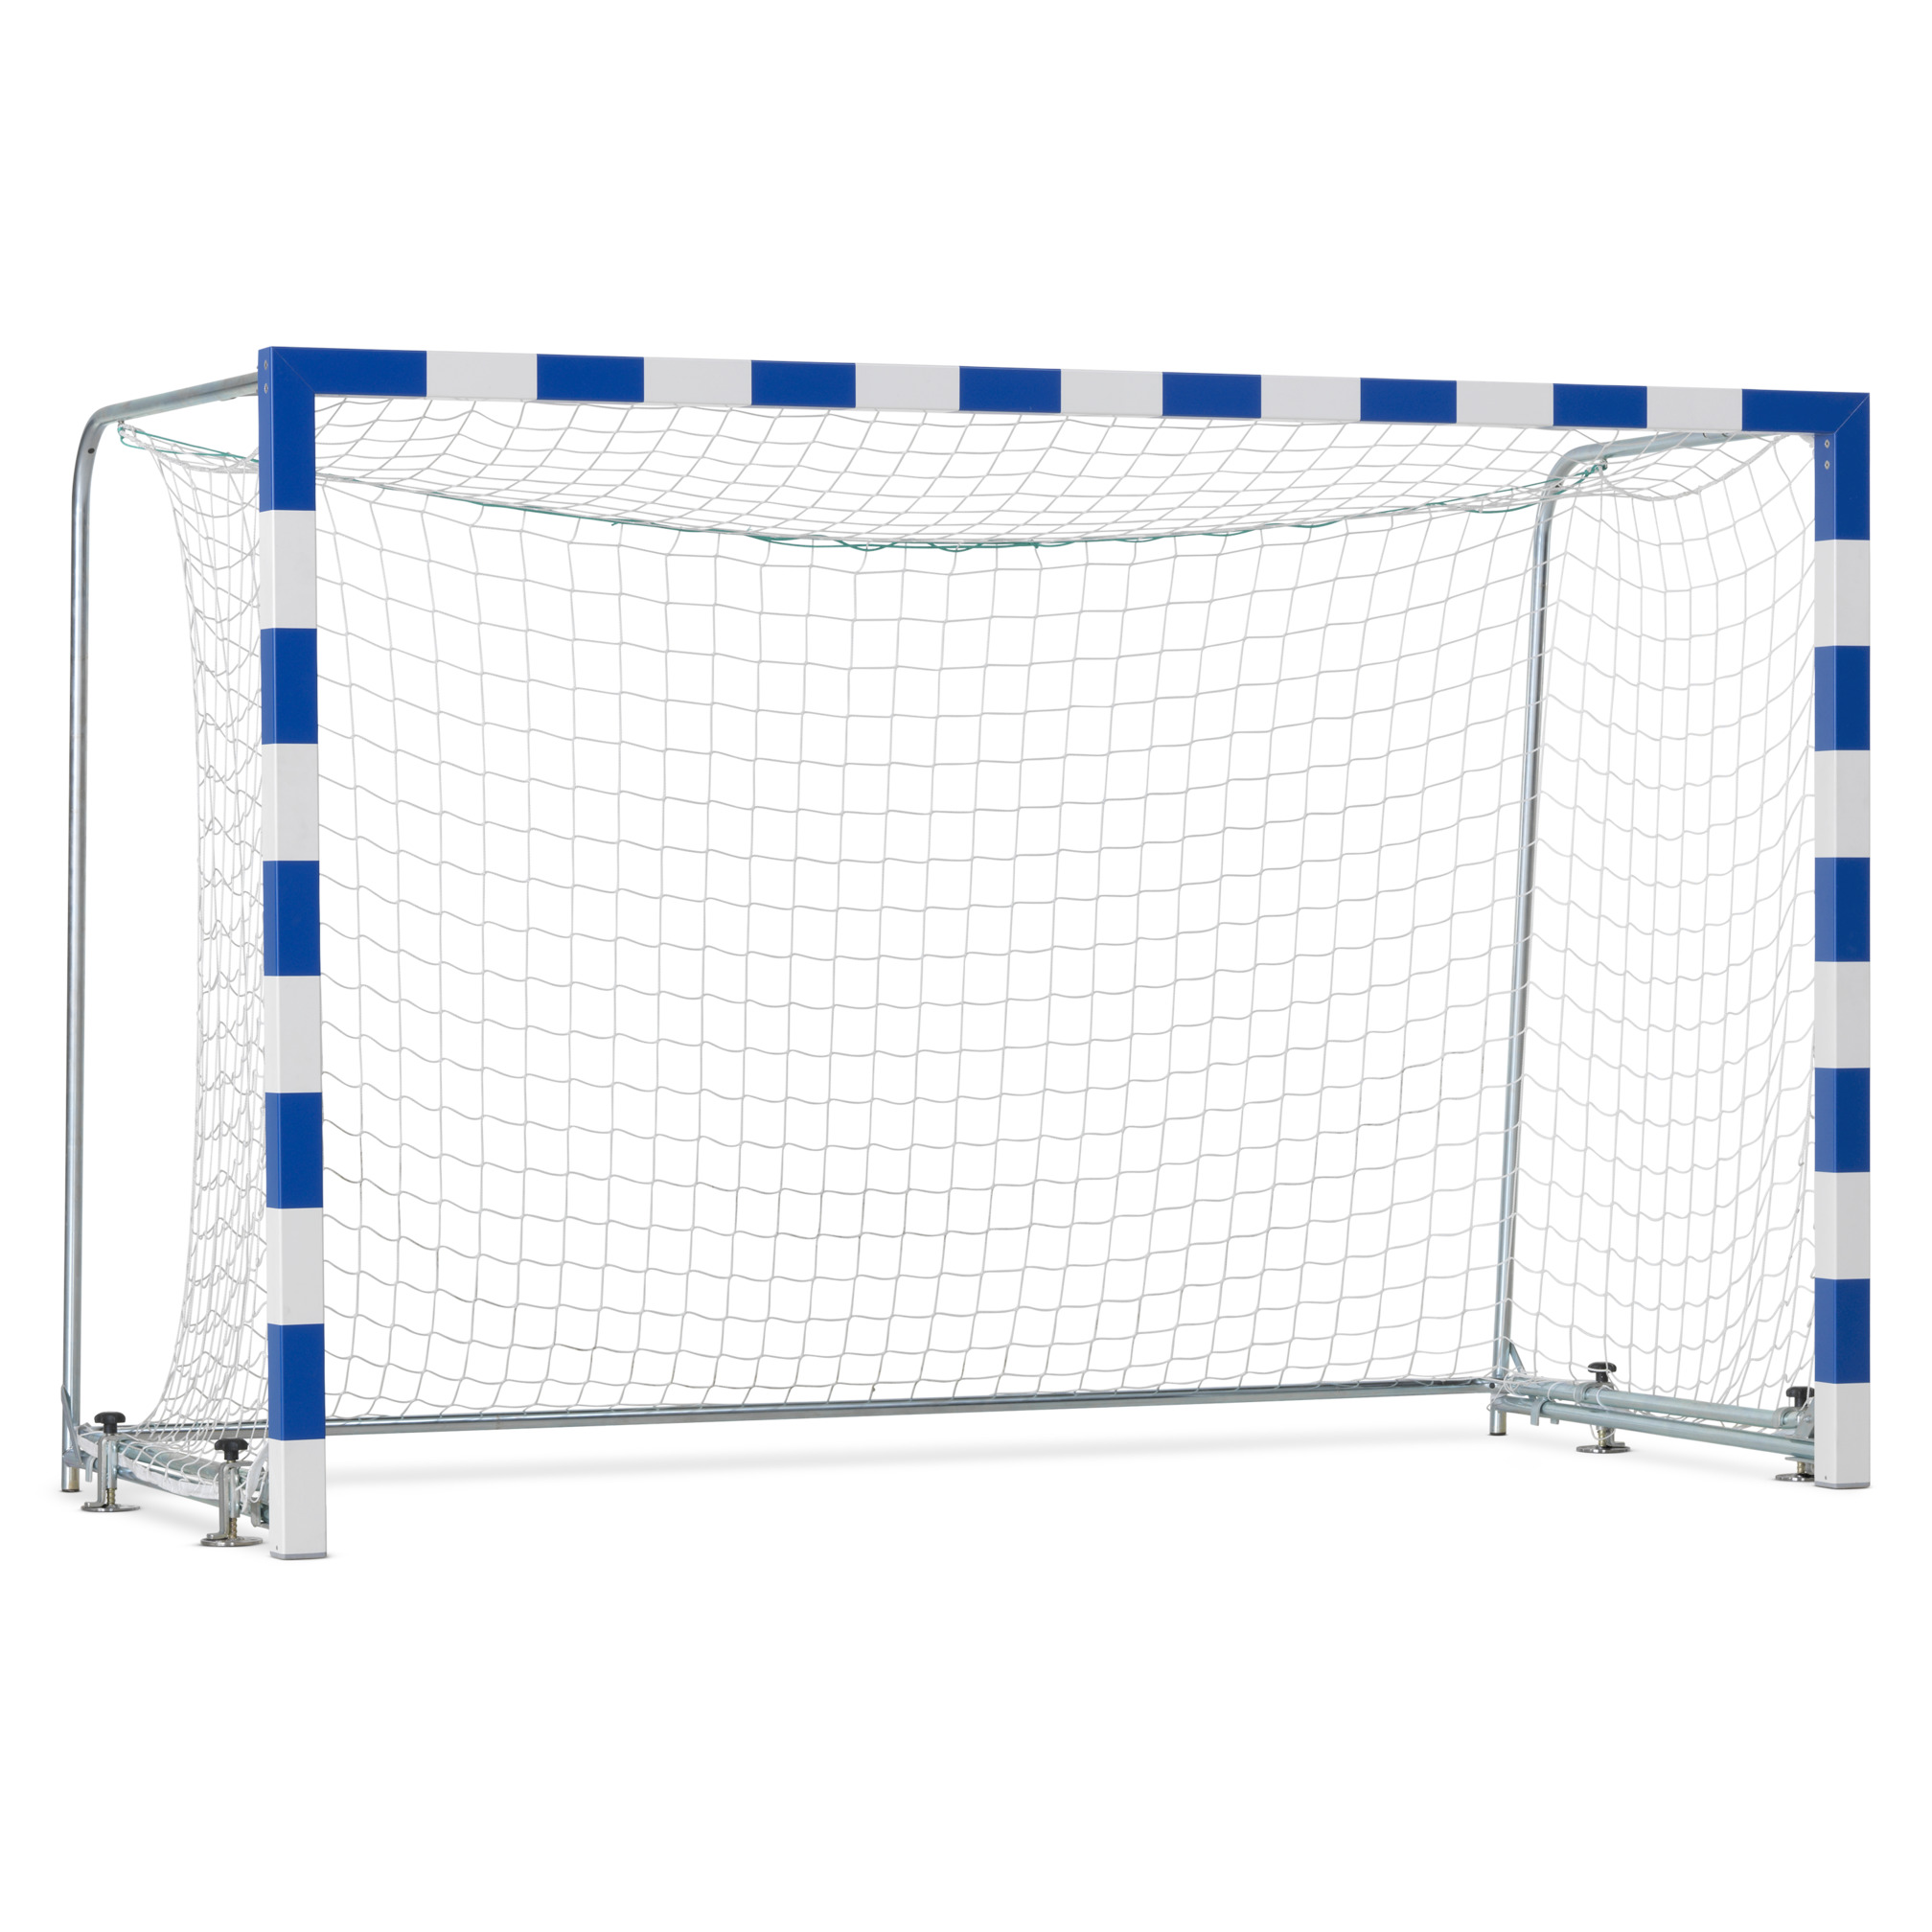 IHF Handball goal with collapsible bracket